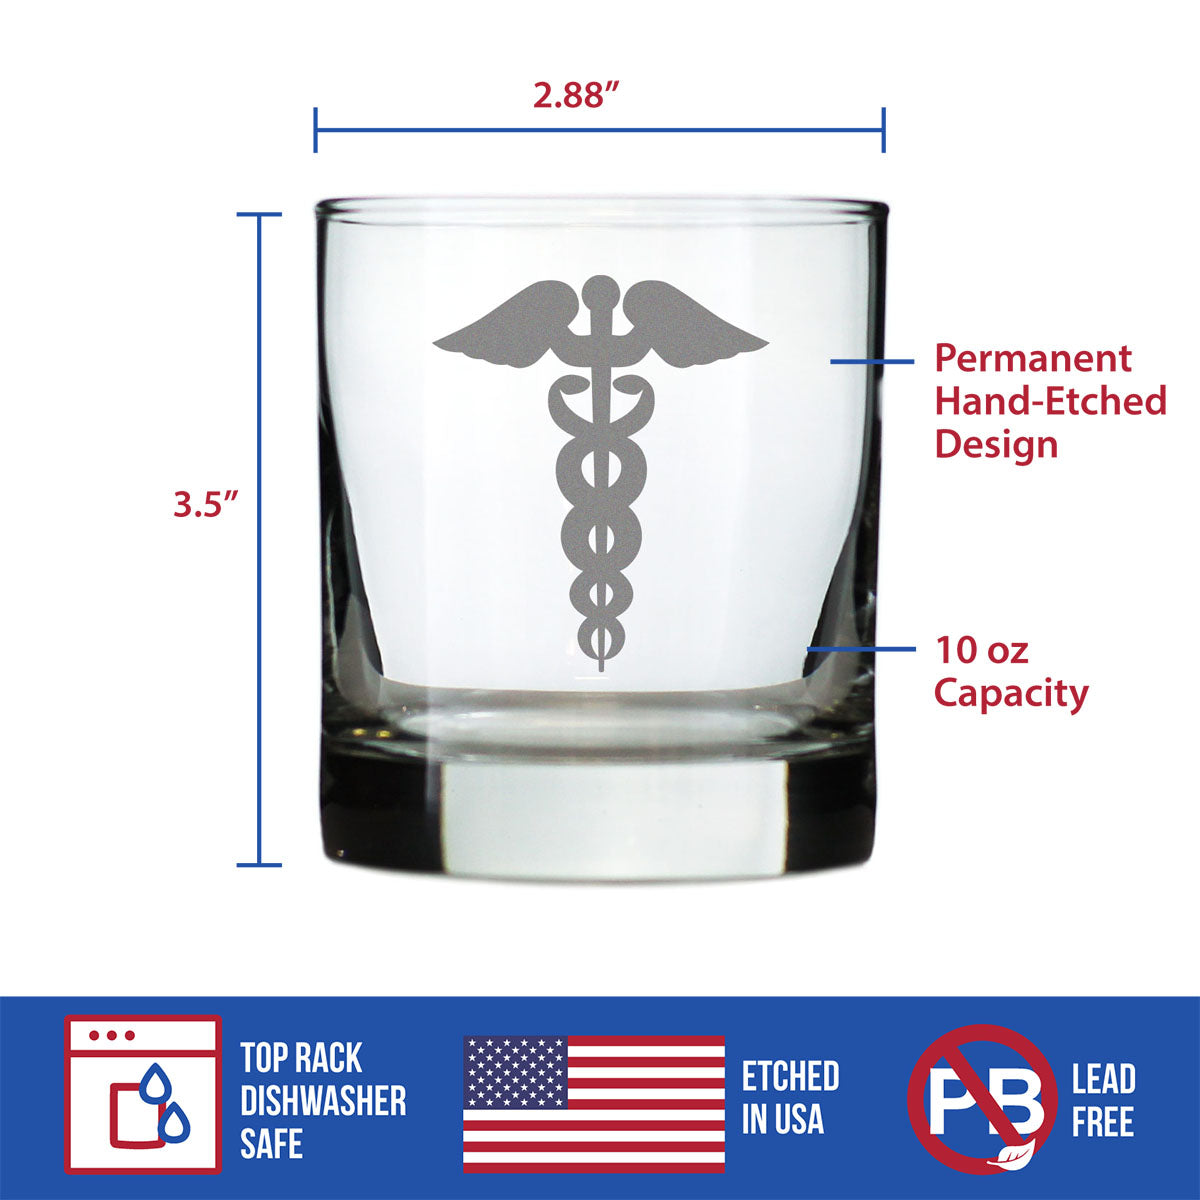 Caduceus Medical Symbol - Whiskey Rocks Glass for Essential Healthcare Workers, Doctors, Nurses, Medical Staff - 10.25 Oz